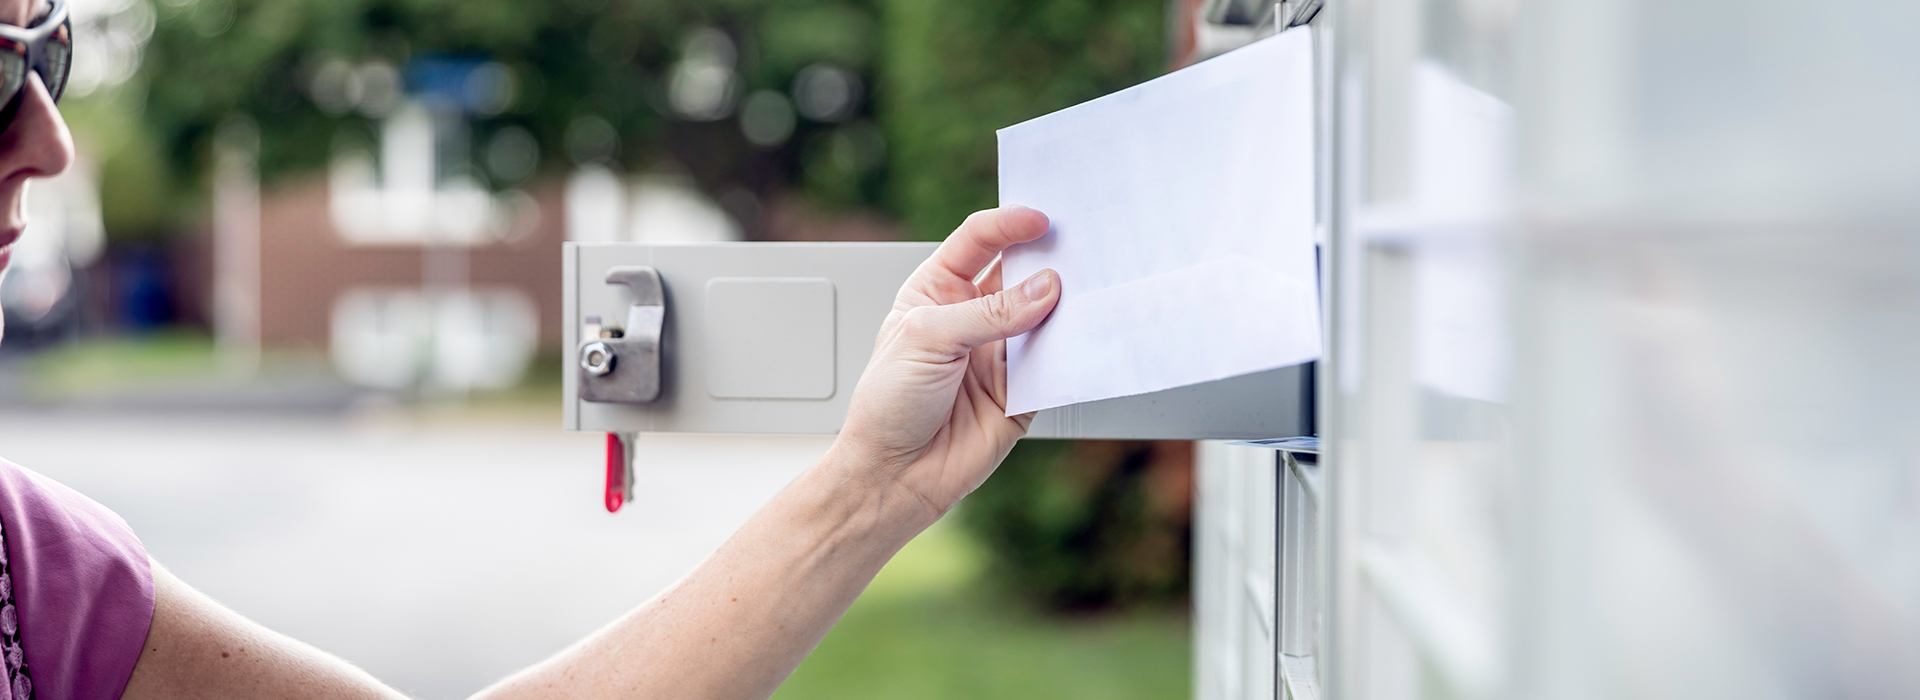 Consumer holding direct mail marketing envelope at mailbox